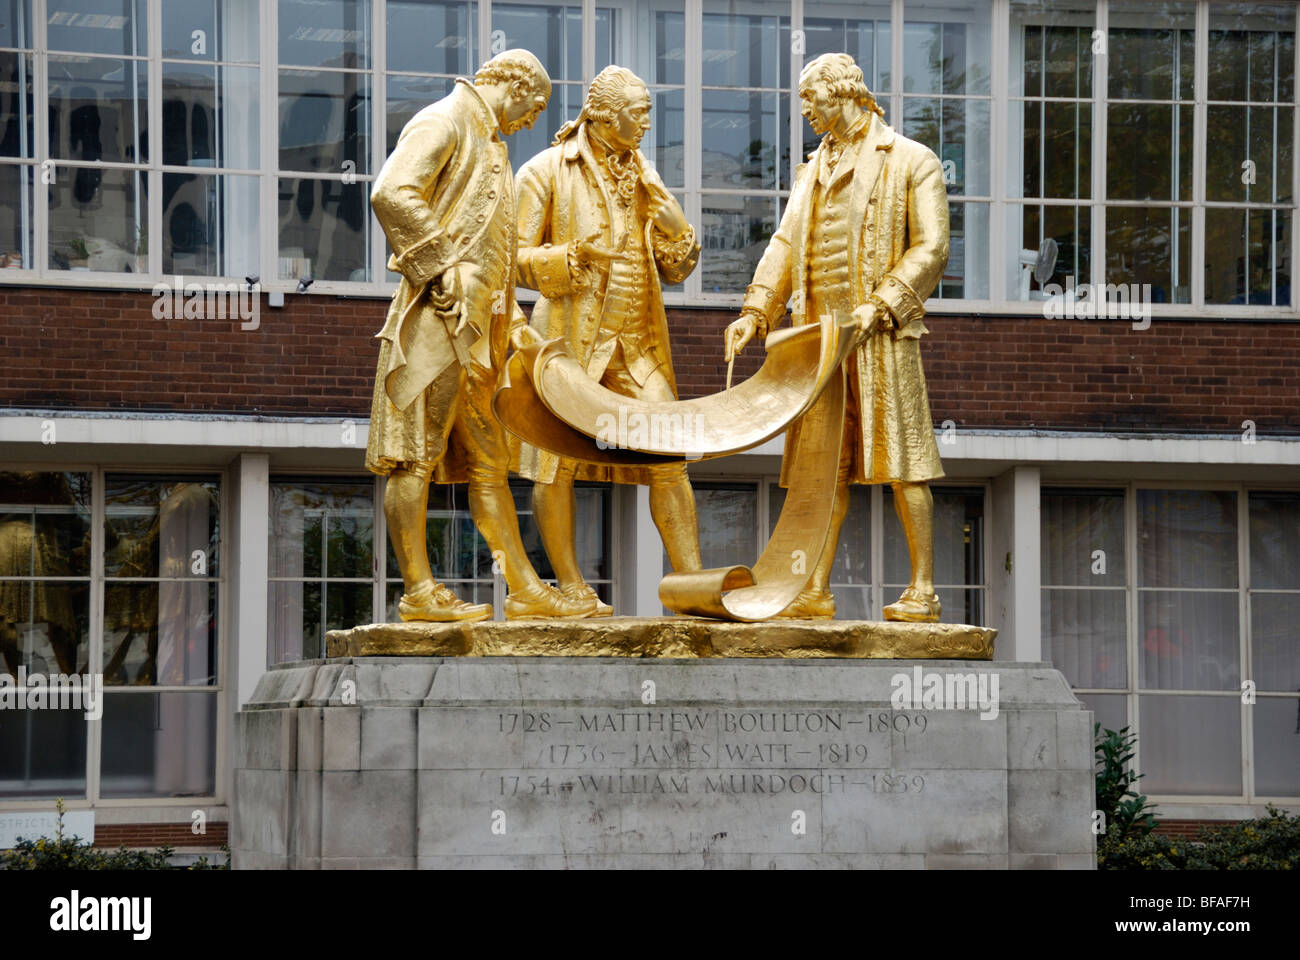 Statue de Matthew Boulton et James Watt, William Murdoch par William Bloye dans Broad Street, Birmingham, UK Banque D'Images